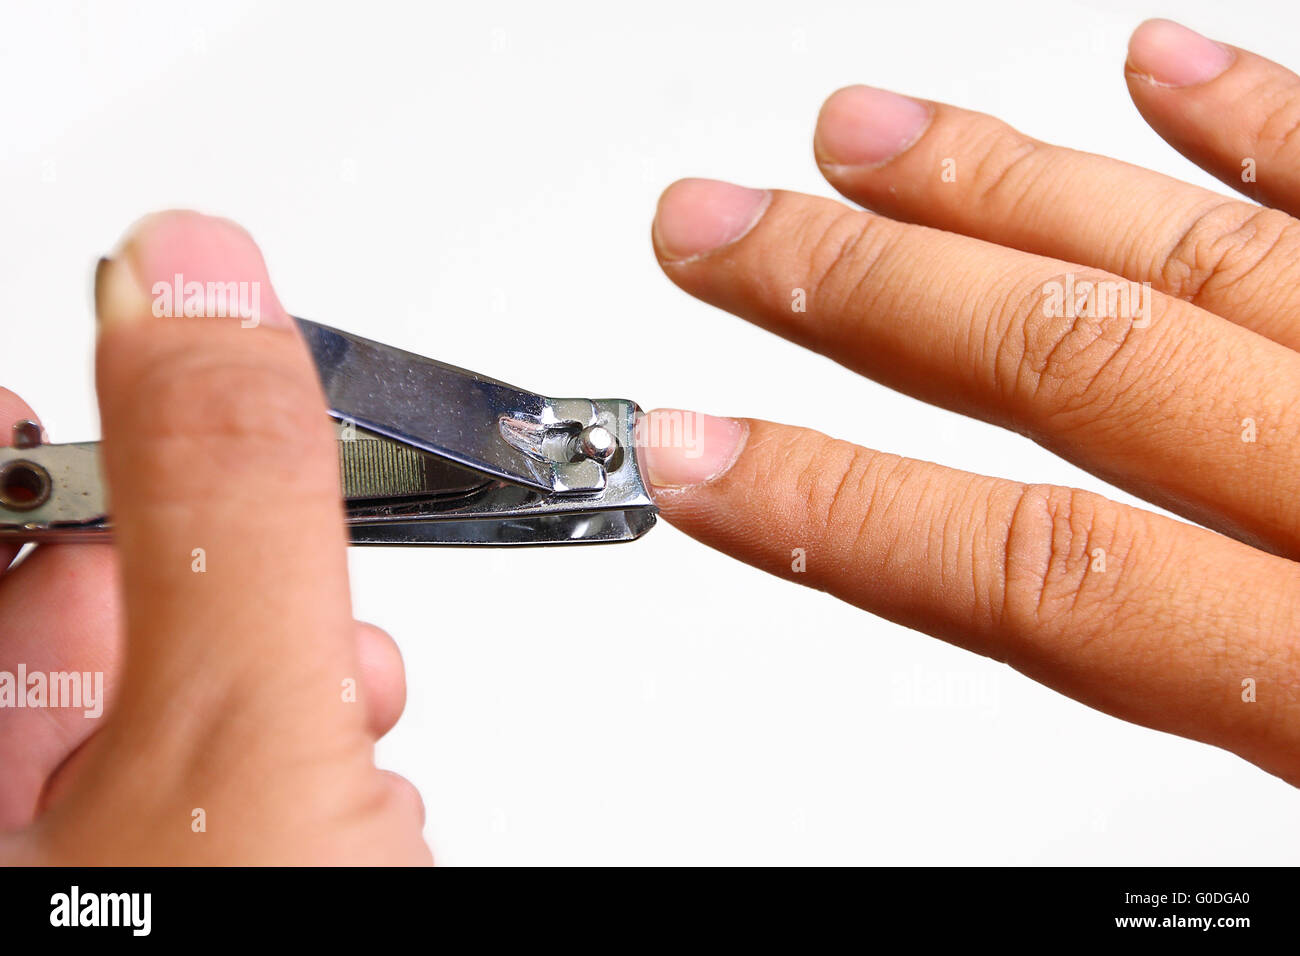 Can Home Health Aides Cut Nails - Right Choice Home Care